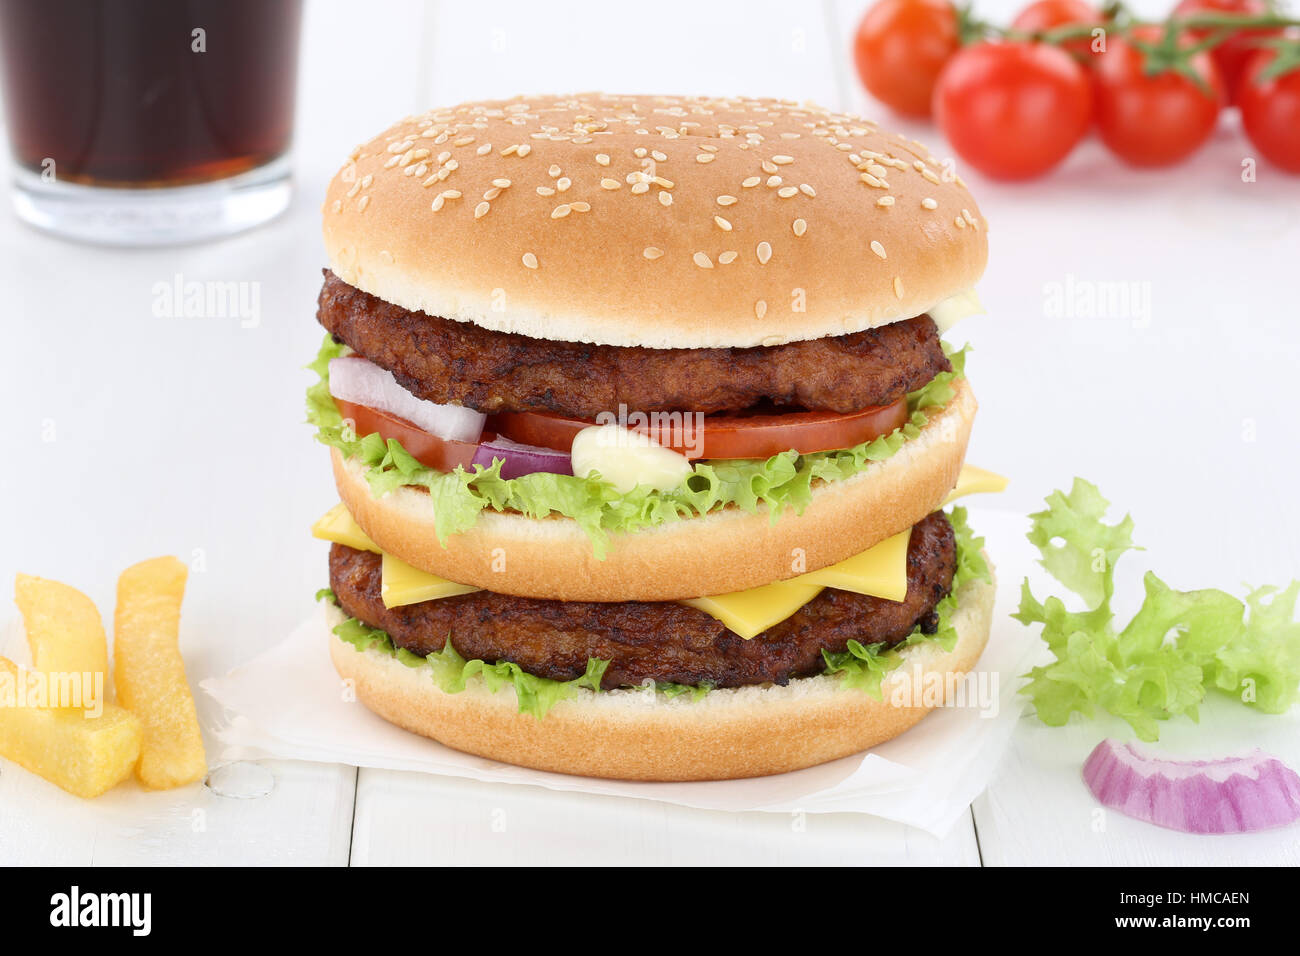 Double burger hamburger menu meal combo cola drink Stock Photo